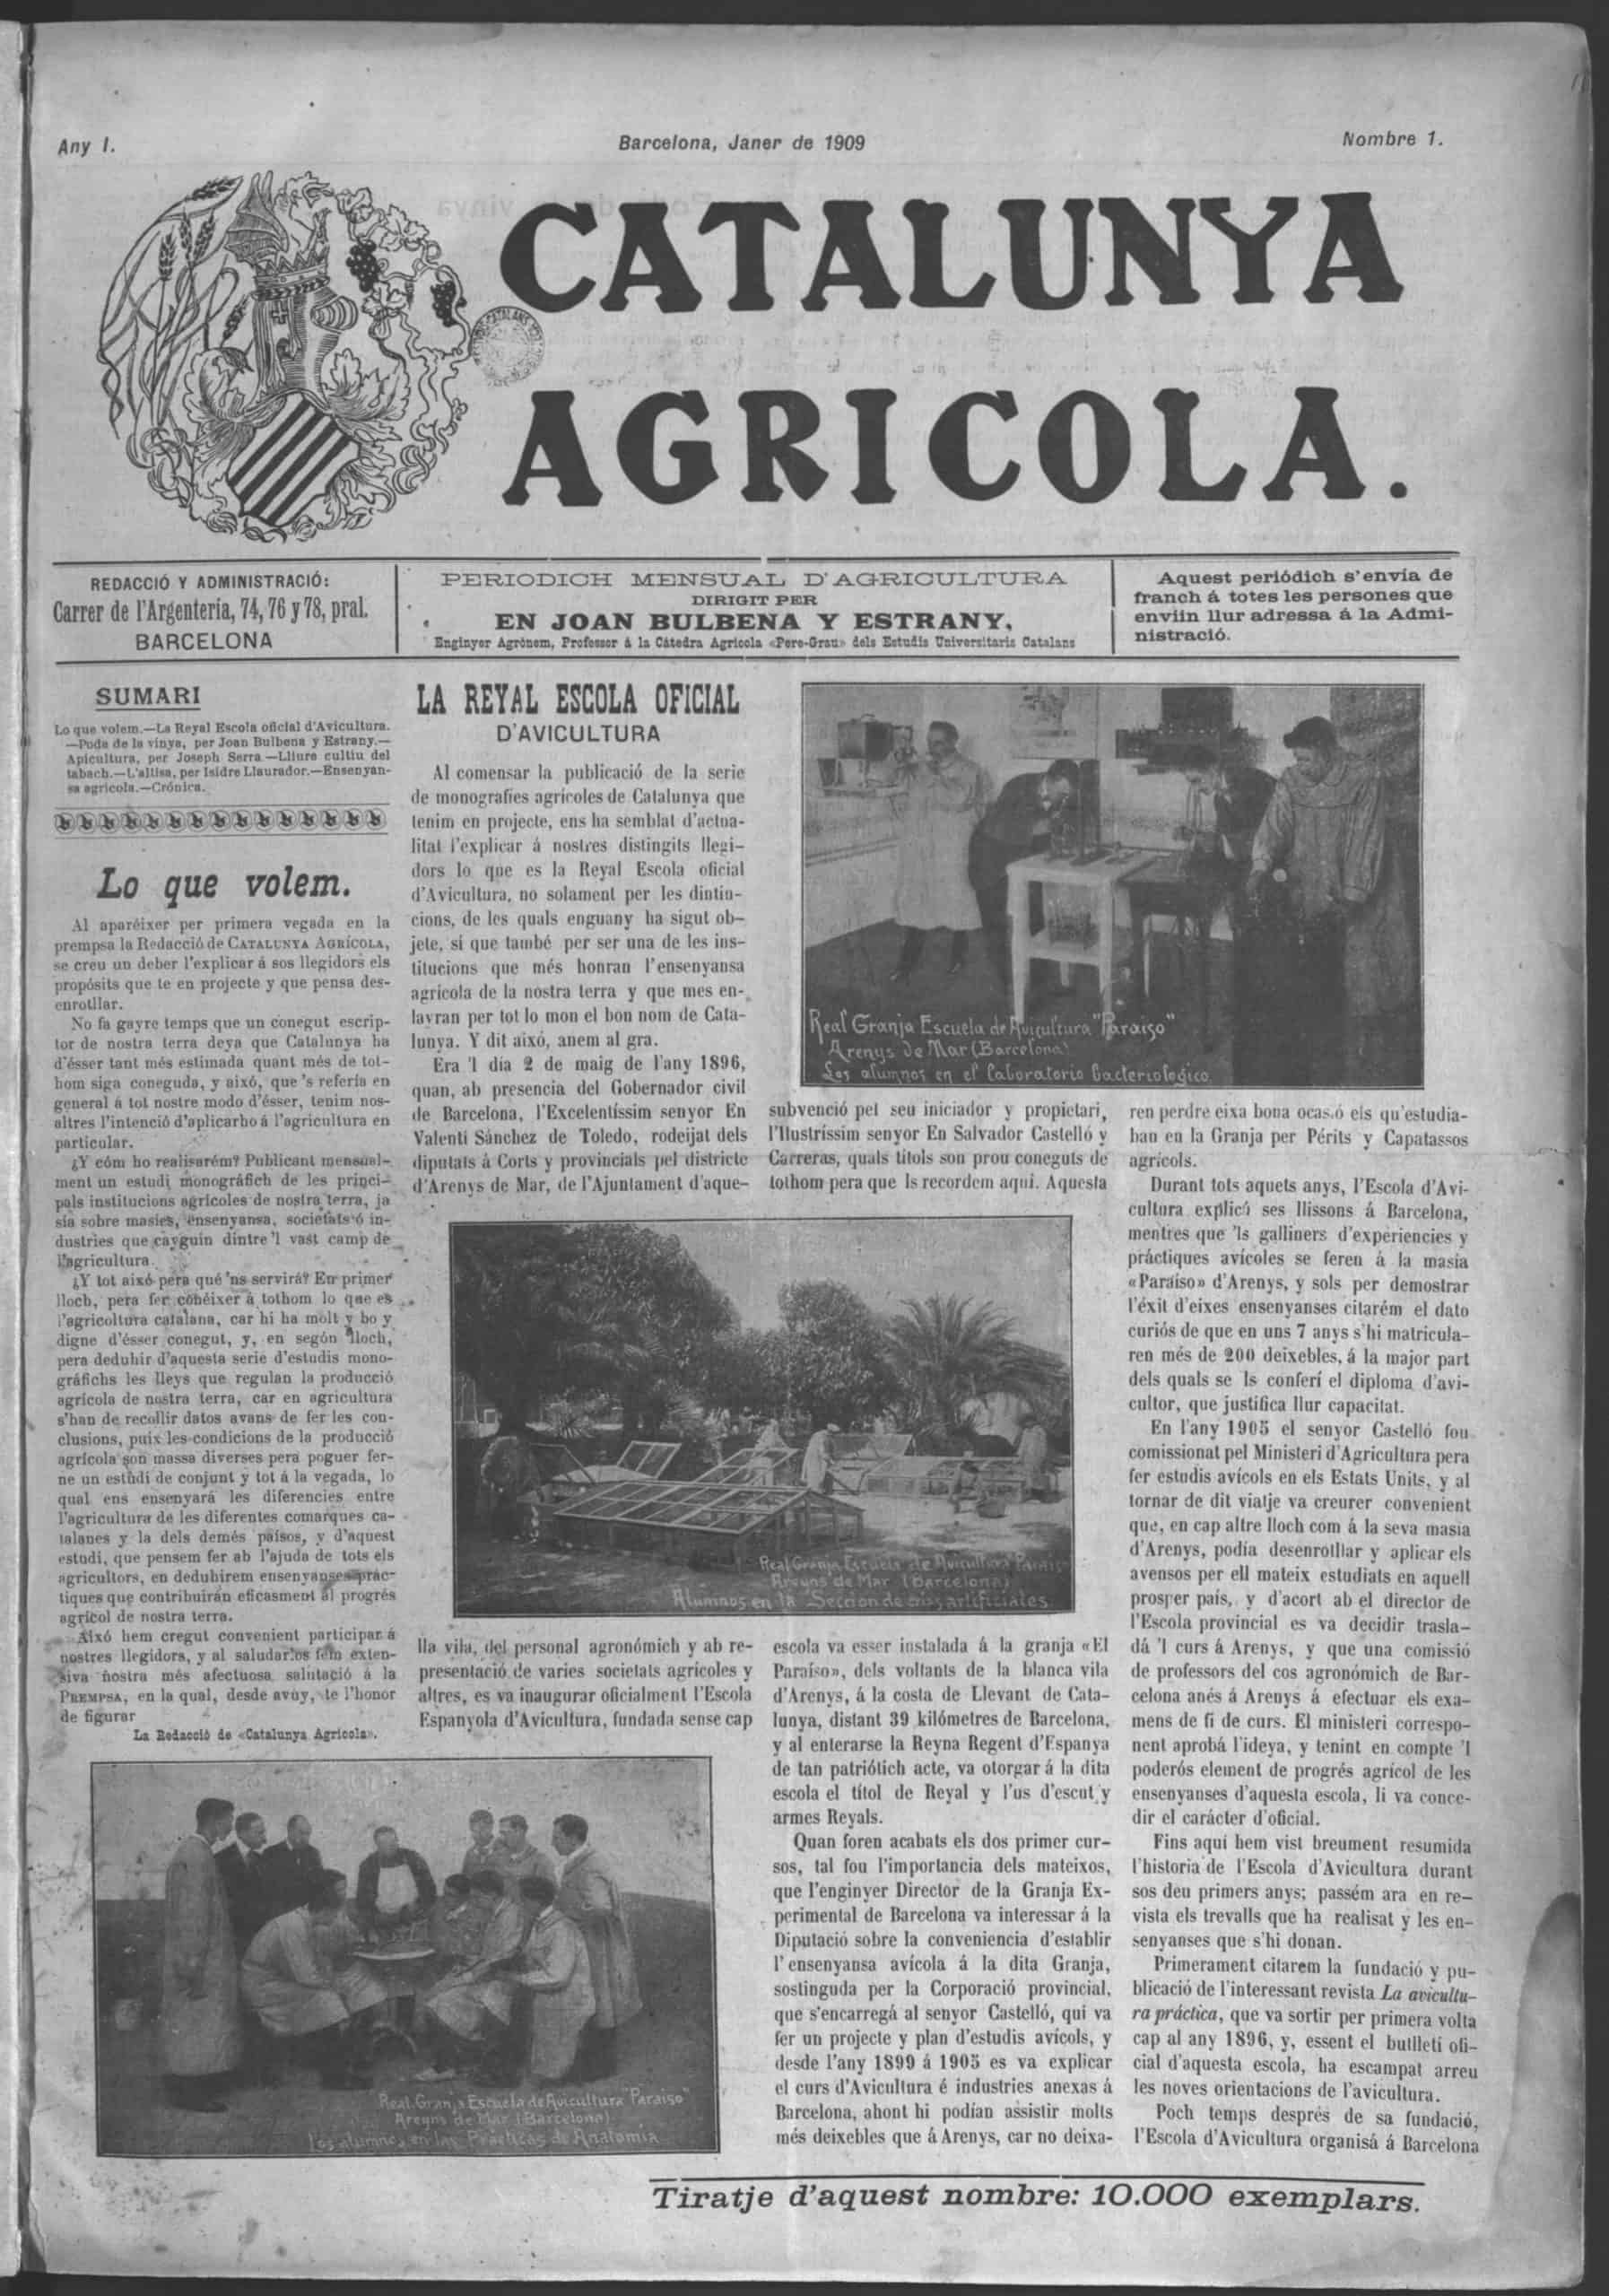 Catalunya agrícola: periodich mensual d’agricultura